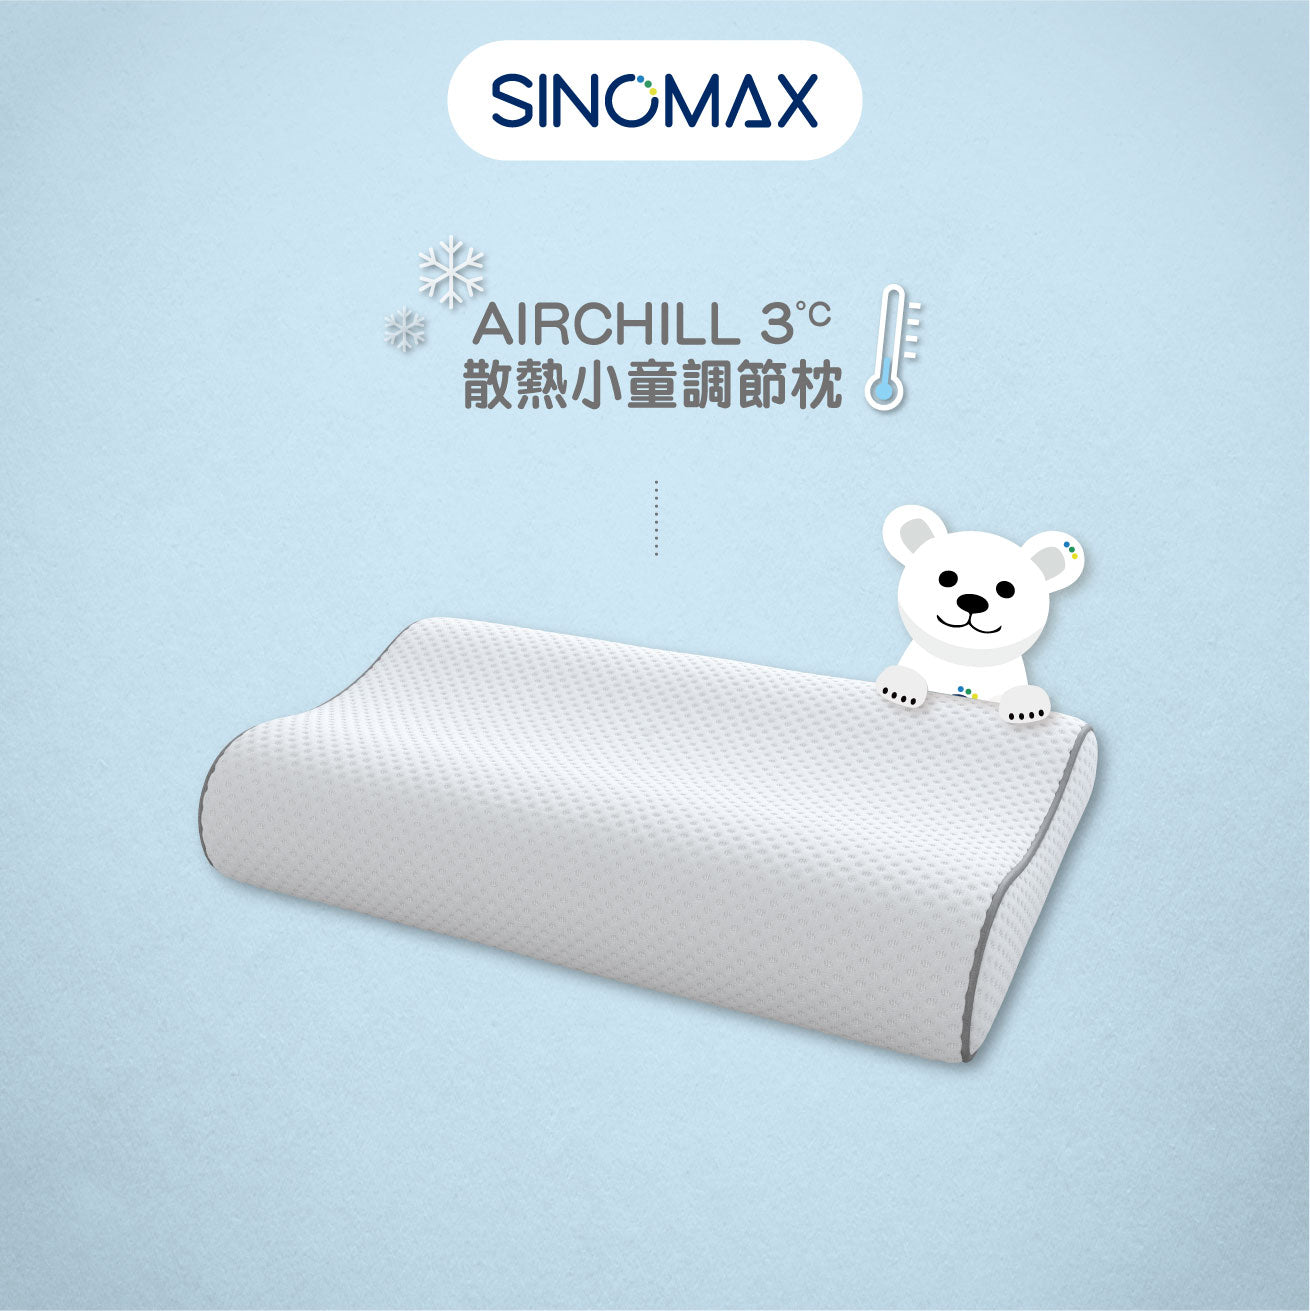 AIRCHILL 3°C Heat Dissipation Adjusting kid Pillow